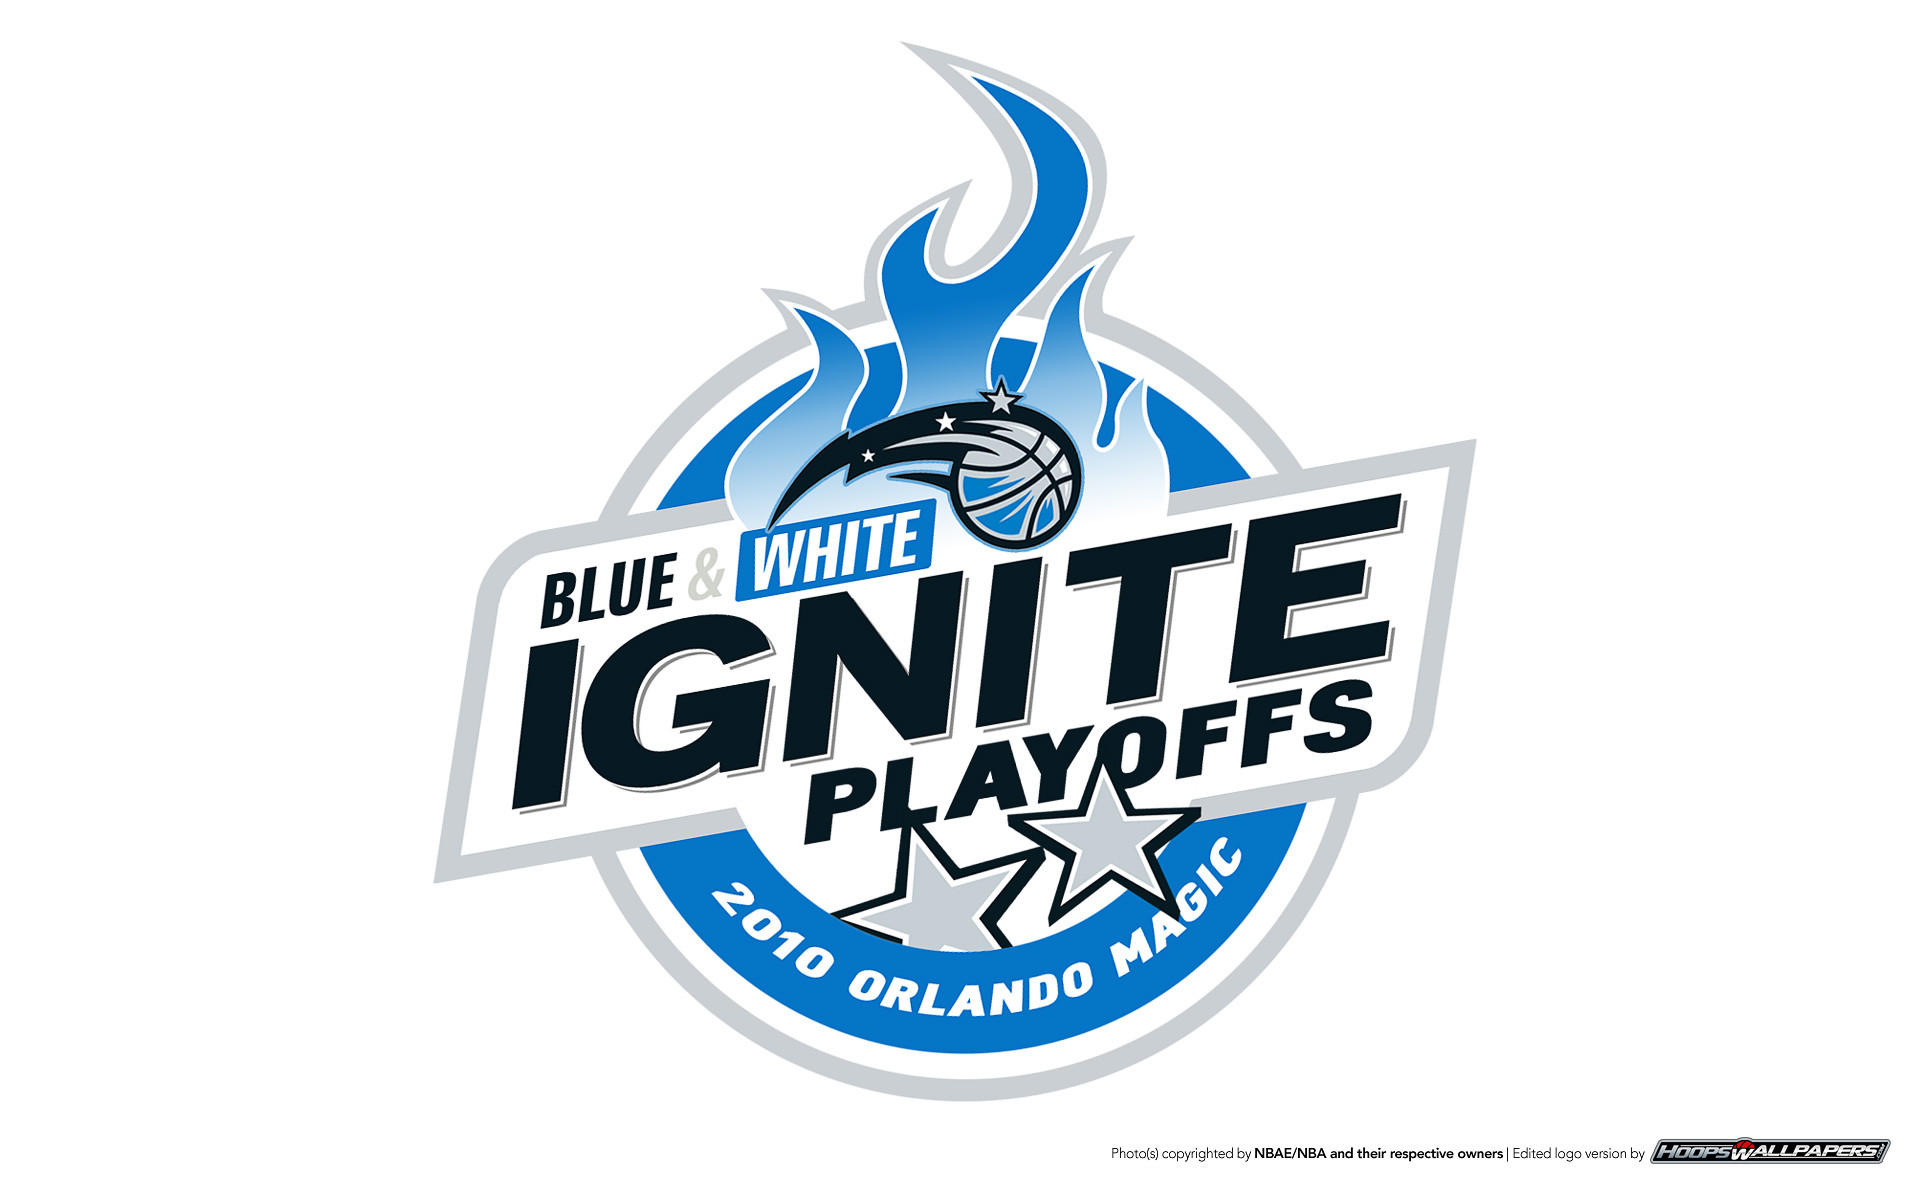 1920x1200 Blue & White Ignite Playoffs 2010 Orlando Magic wallpaper